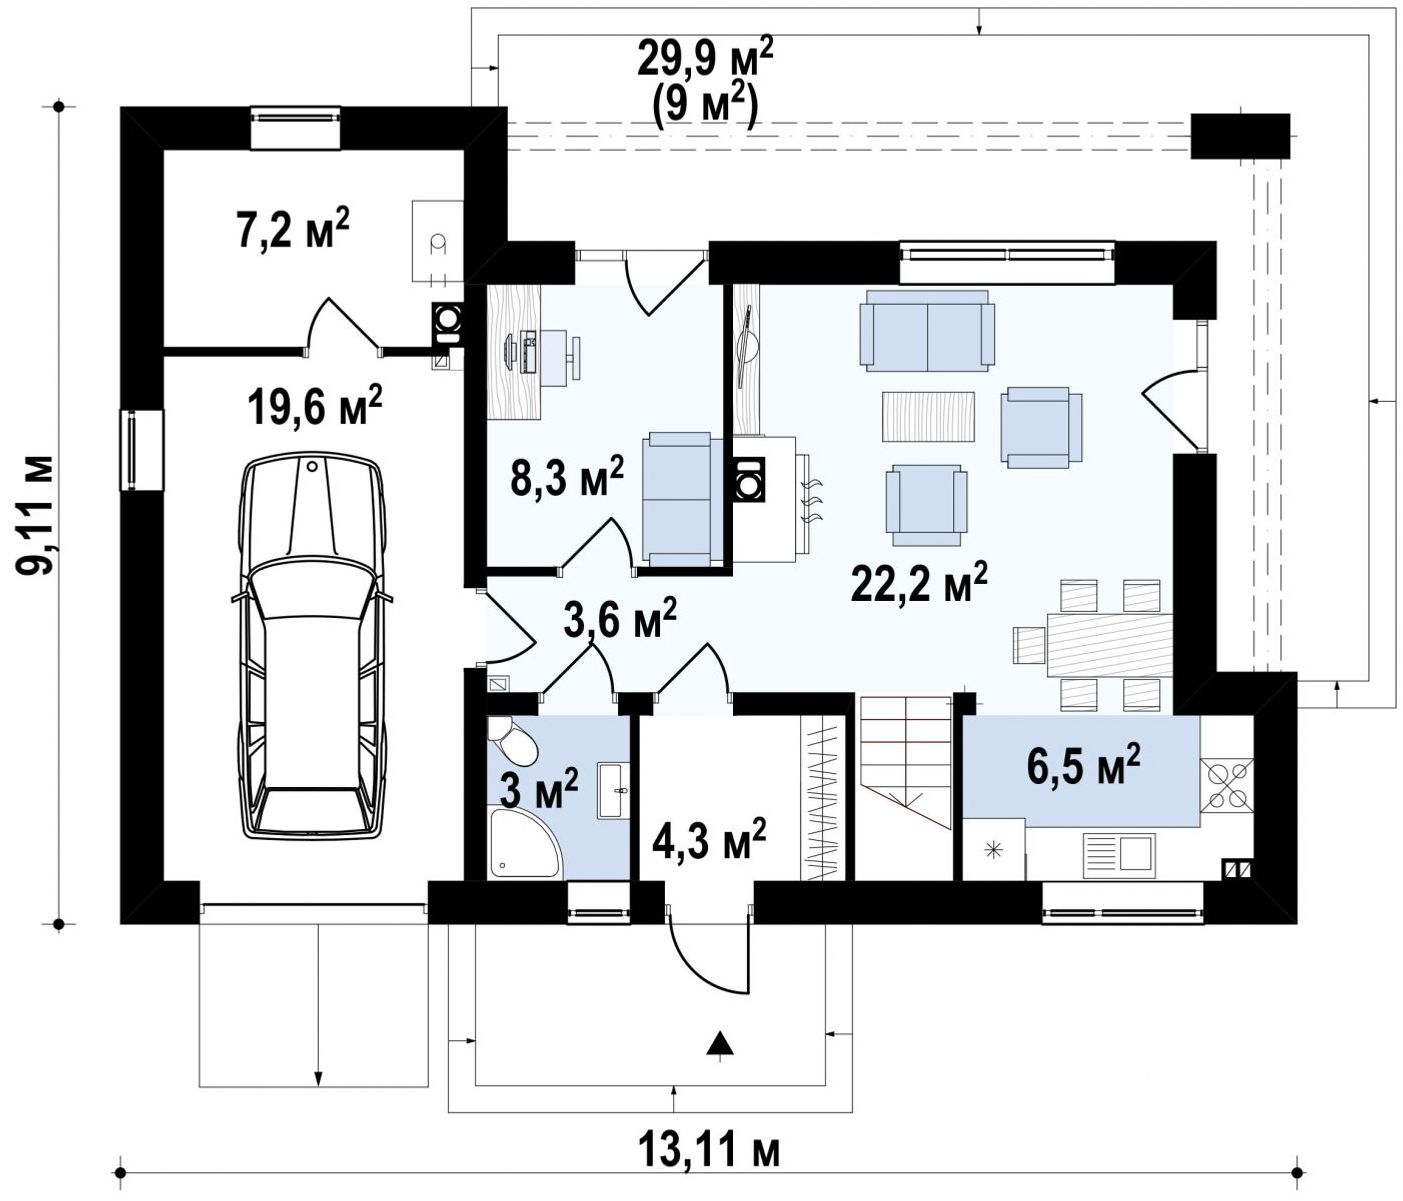 1-ый этаж - план проекта Z222